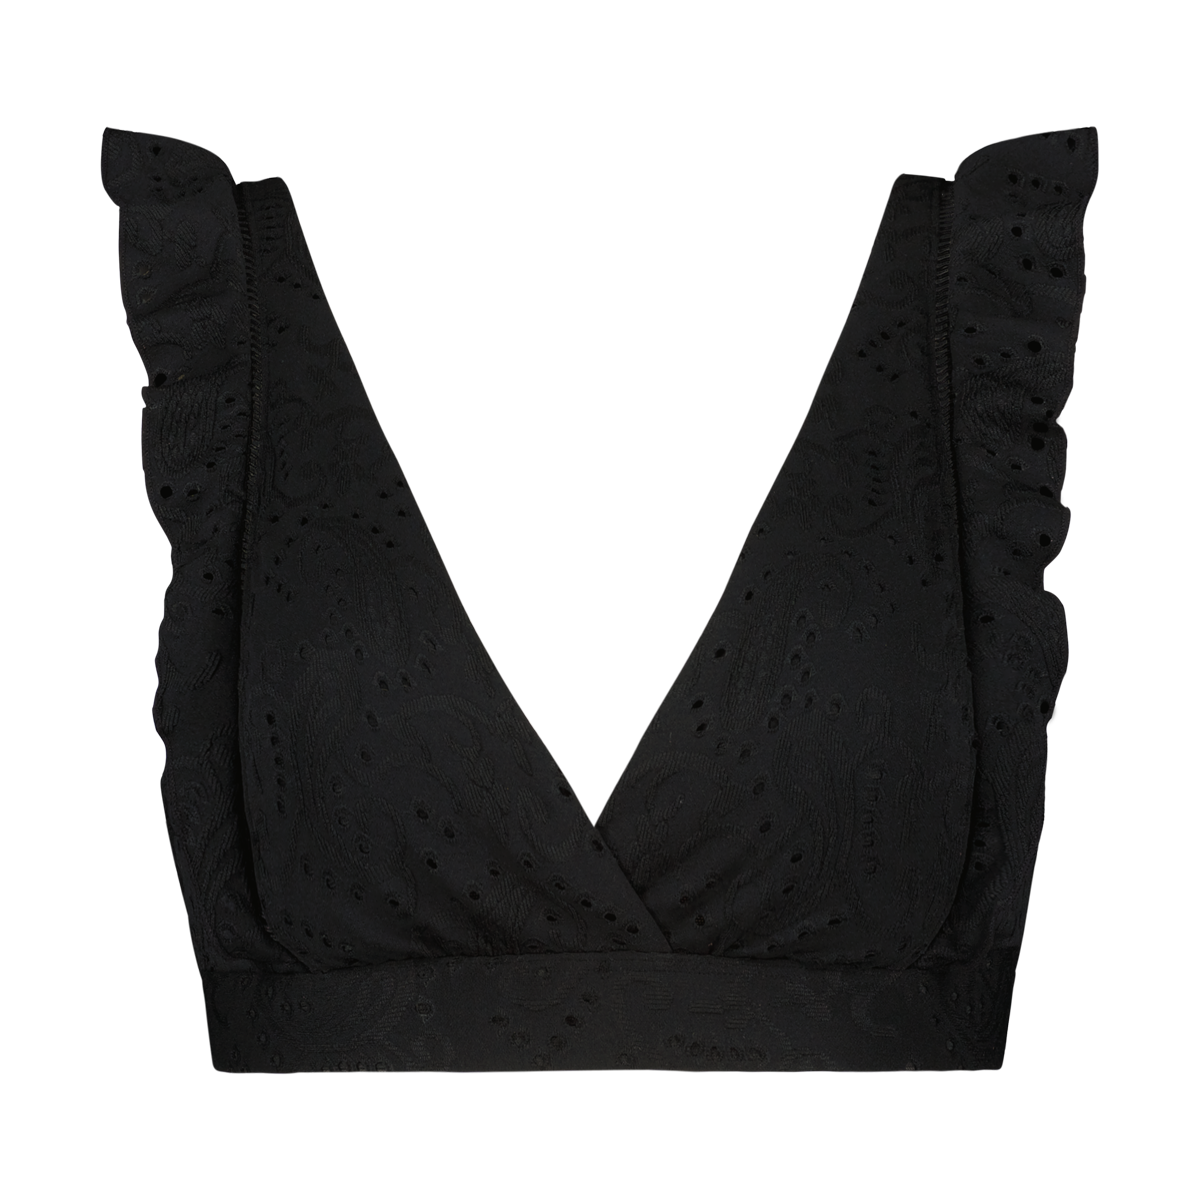 265127 - Beachlife Bikinitop Padded Black Embroidery